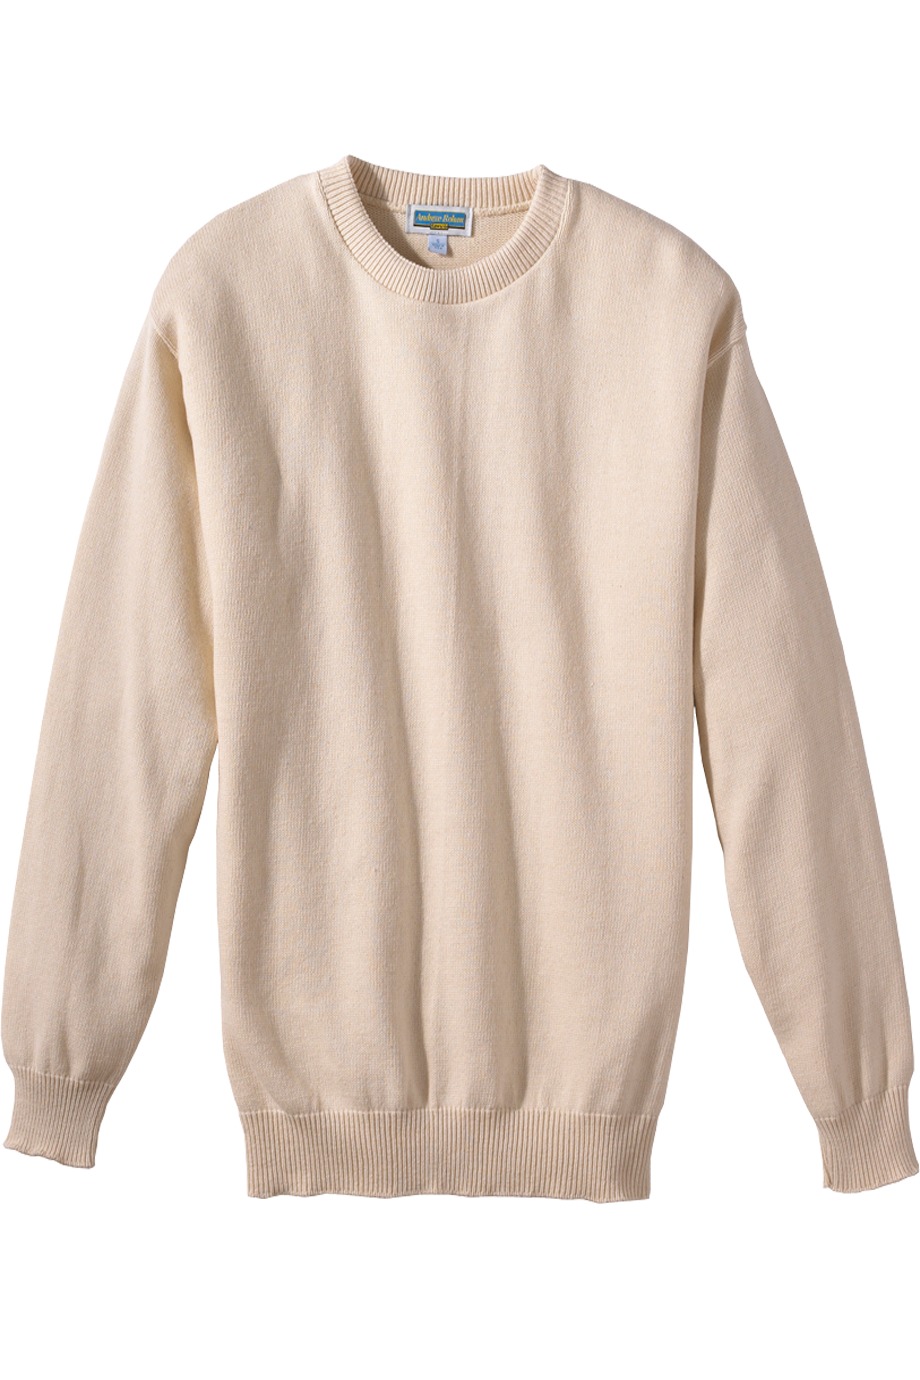 Edwards Garment 786 - Jersey Stitch Crew Neck Sweater